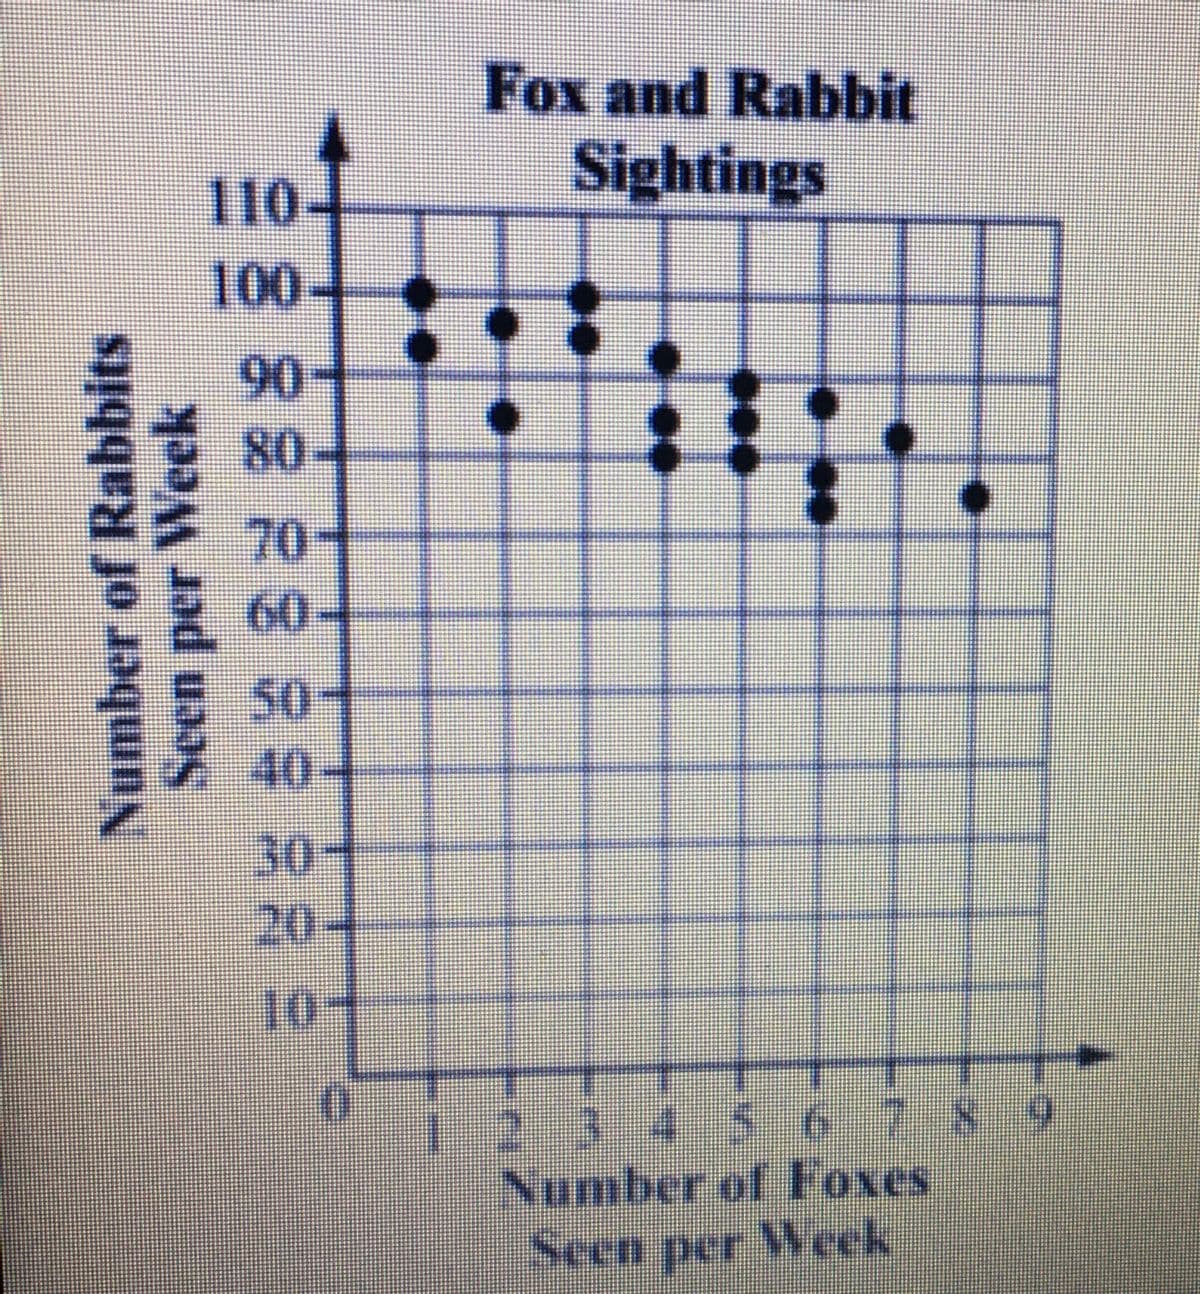 Fox and Rabbit
Sightings
110-
100-
90-
80
70
60
50-
40
30-
20-
10
23456 7 8 9
Number of Foxes
வயbi
Seen per Week
Number of Rabbits
Seen per Week
